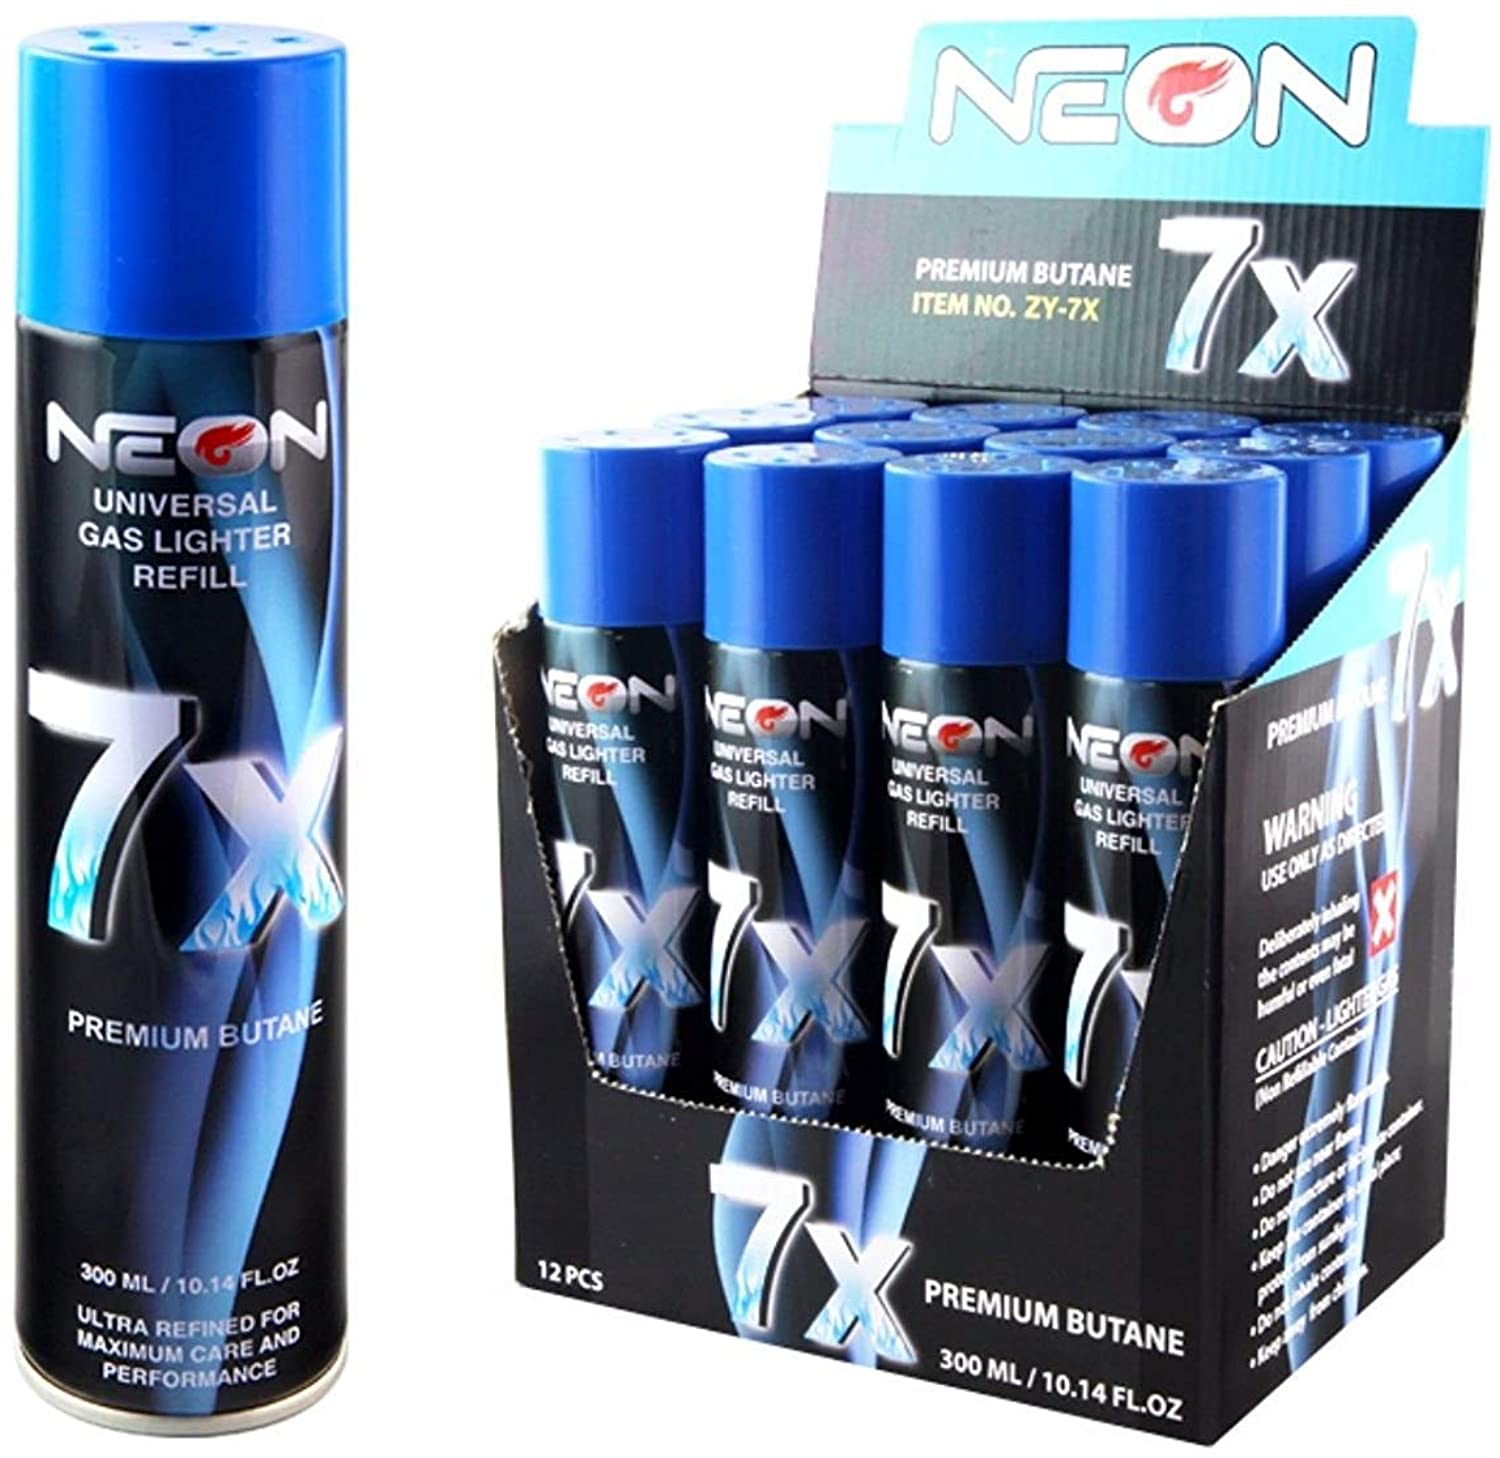 Neon 7x Refined Butane Gas 300ml (12 Cans)